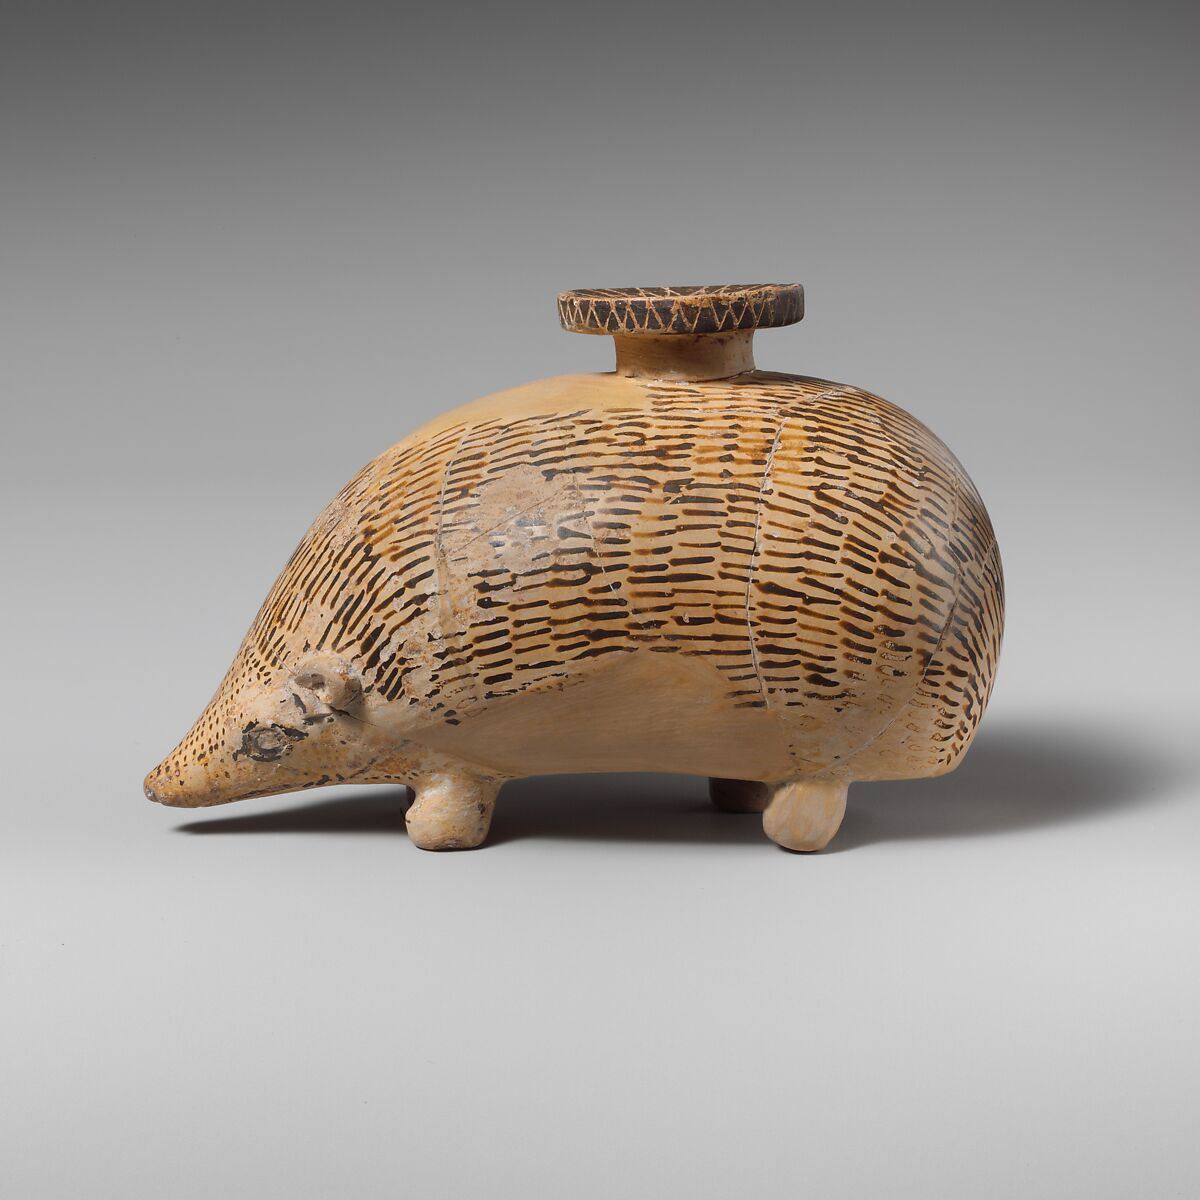 Terracotta aryballos (perfume vase) in the form of a hedgehog, Terracotta, Rhodian